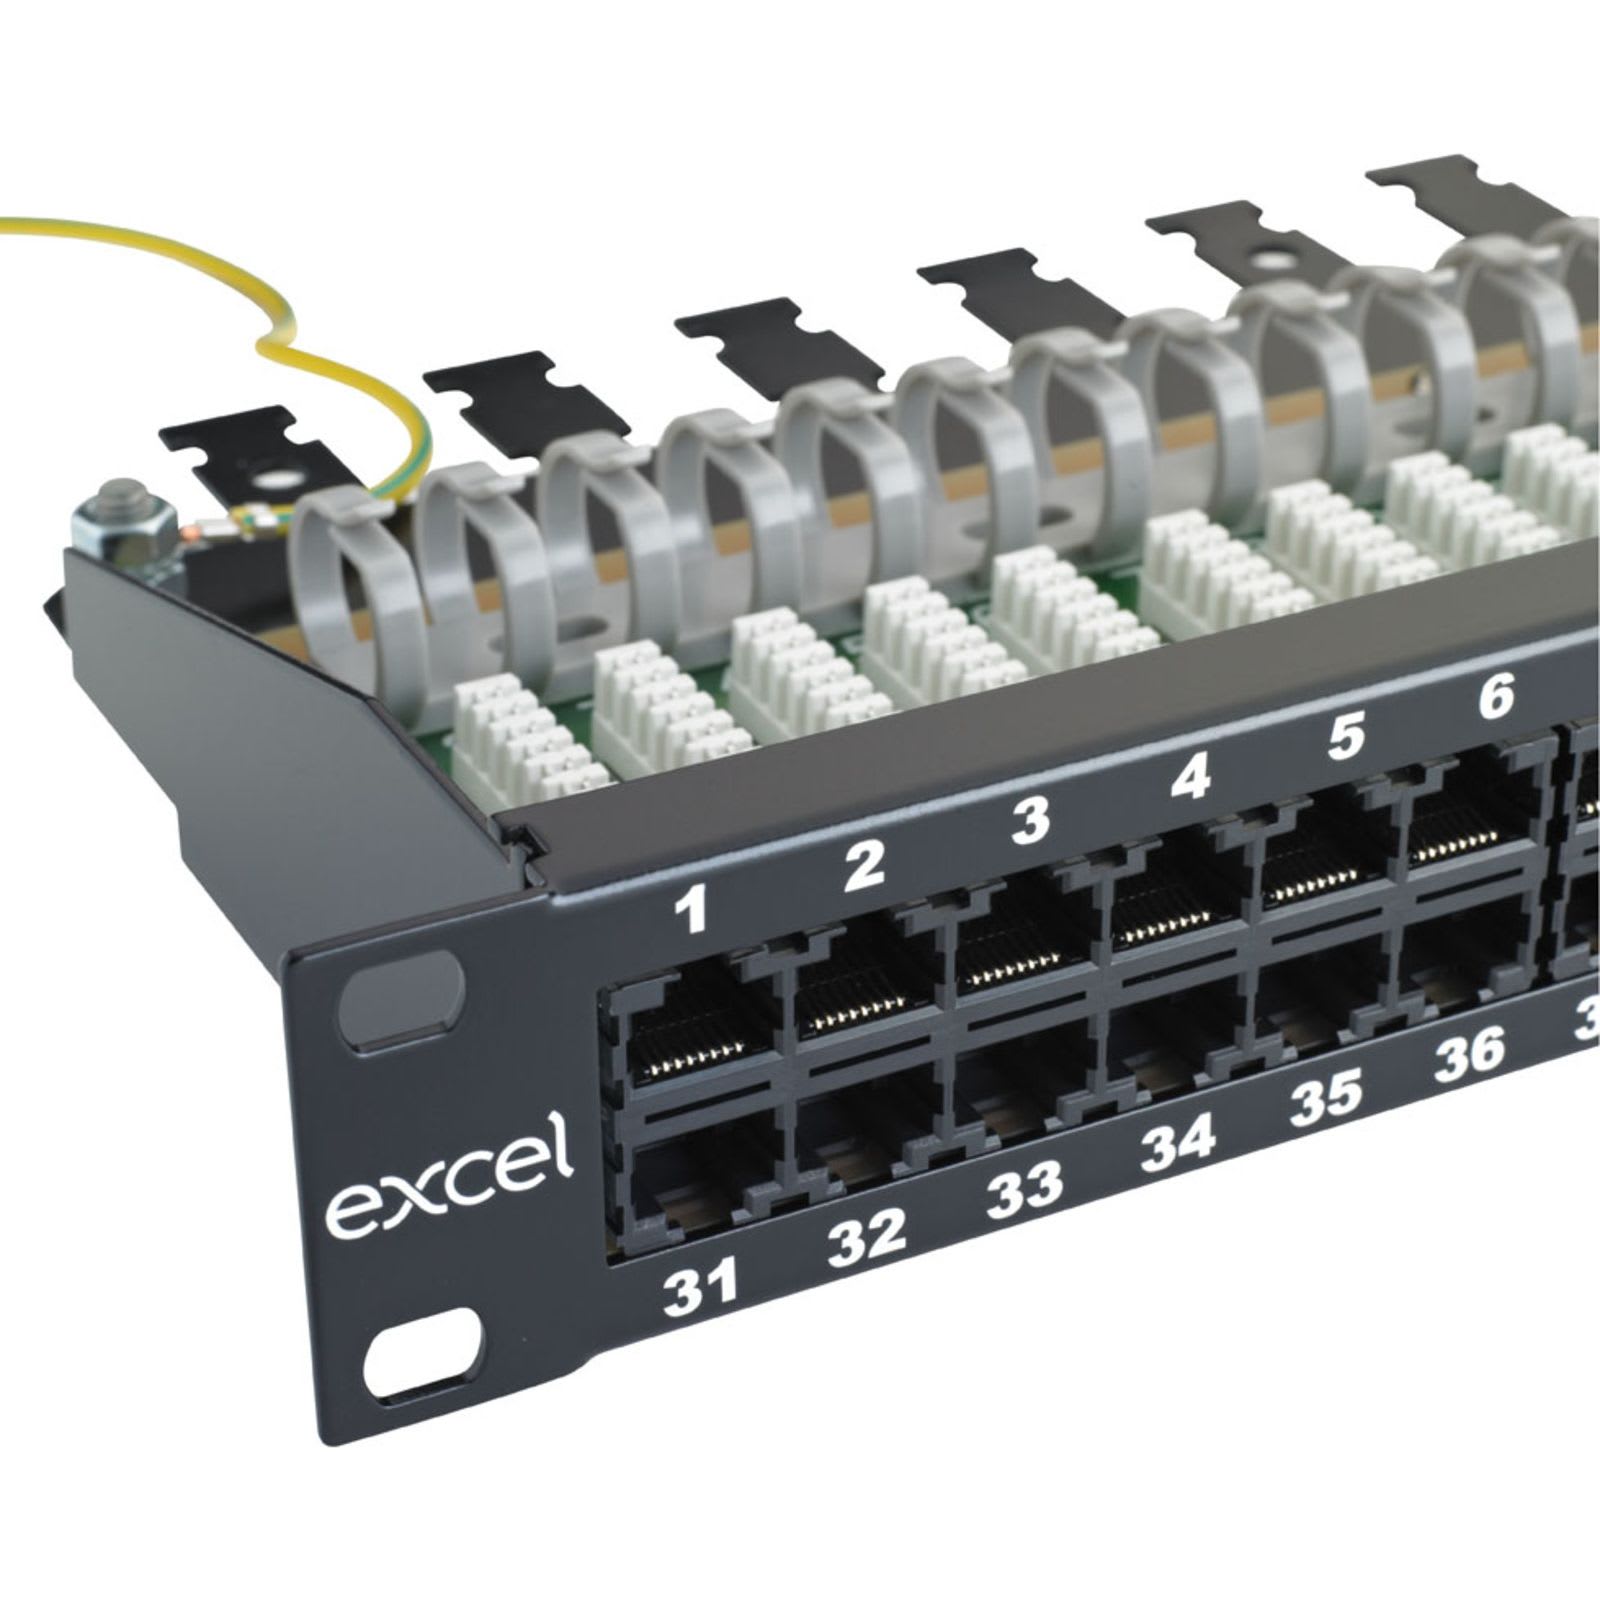 Excel Networking Solutions - Voice RJ45 Patch Panel - 25-port, 3-pair, 1U - Black